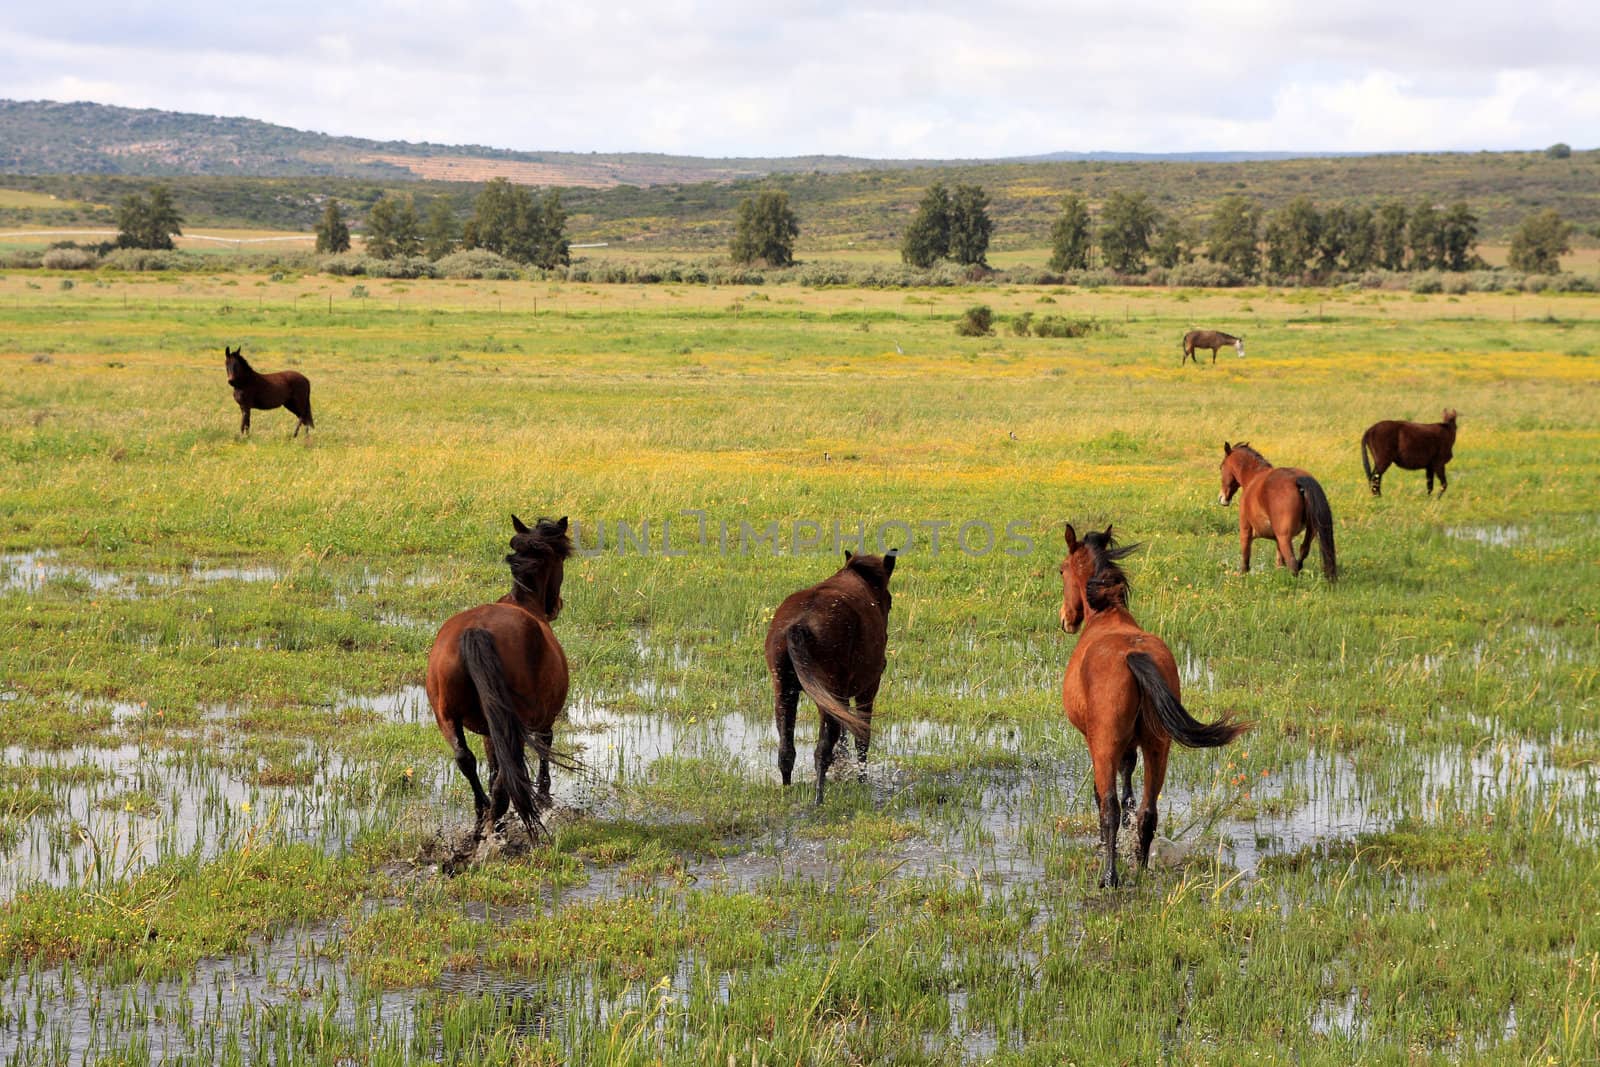 Horses galloping across wetlands in rural South Africa